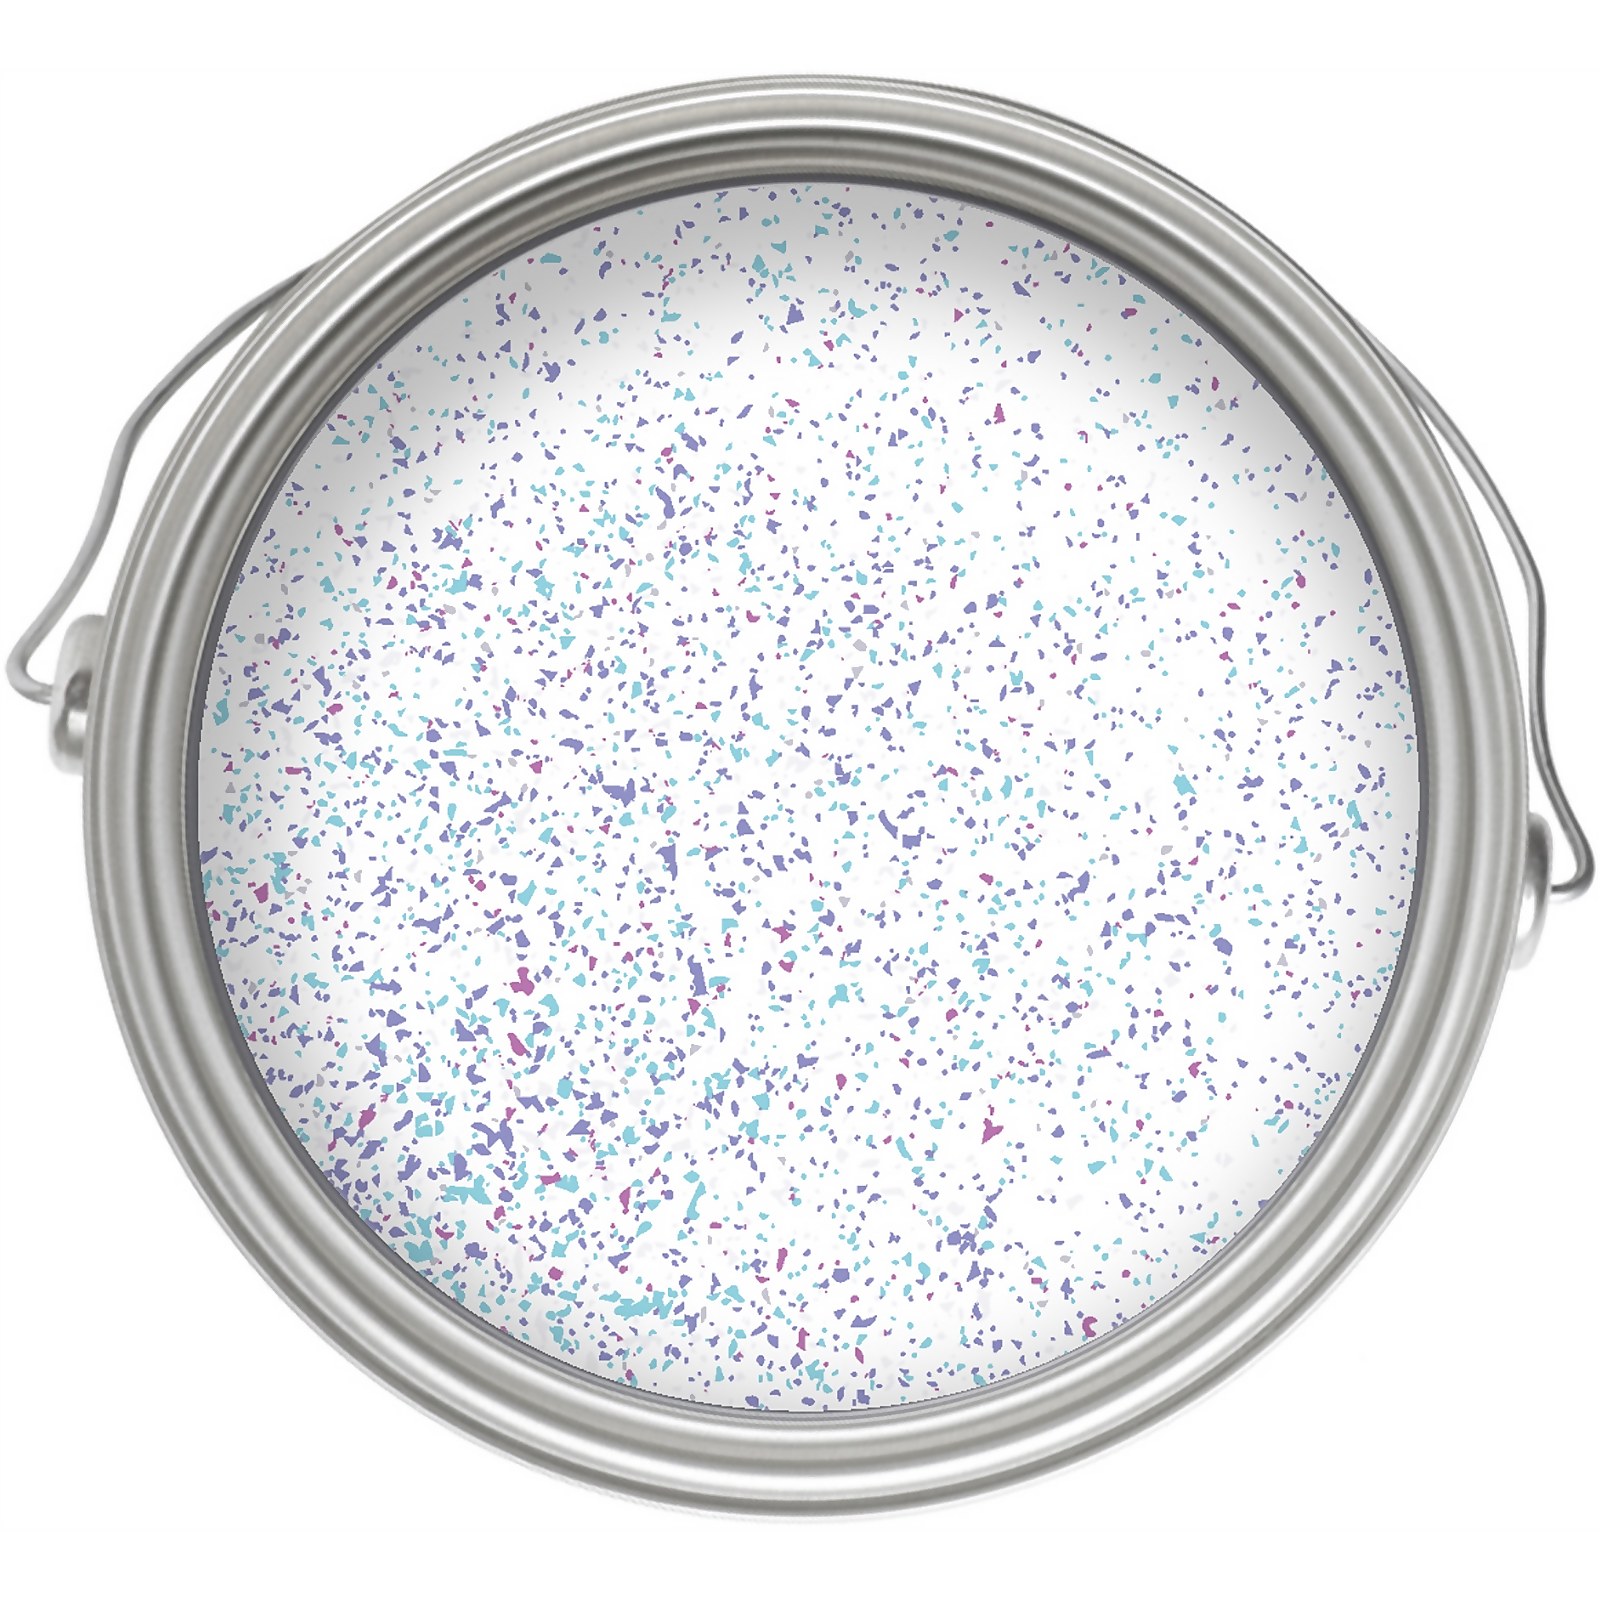 Photo of Craig & Rose Artisan Glitter Glaze Paint - Diamond Dust - 100ml